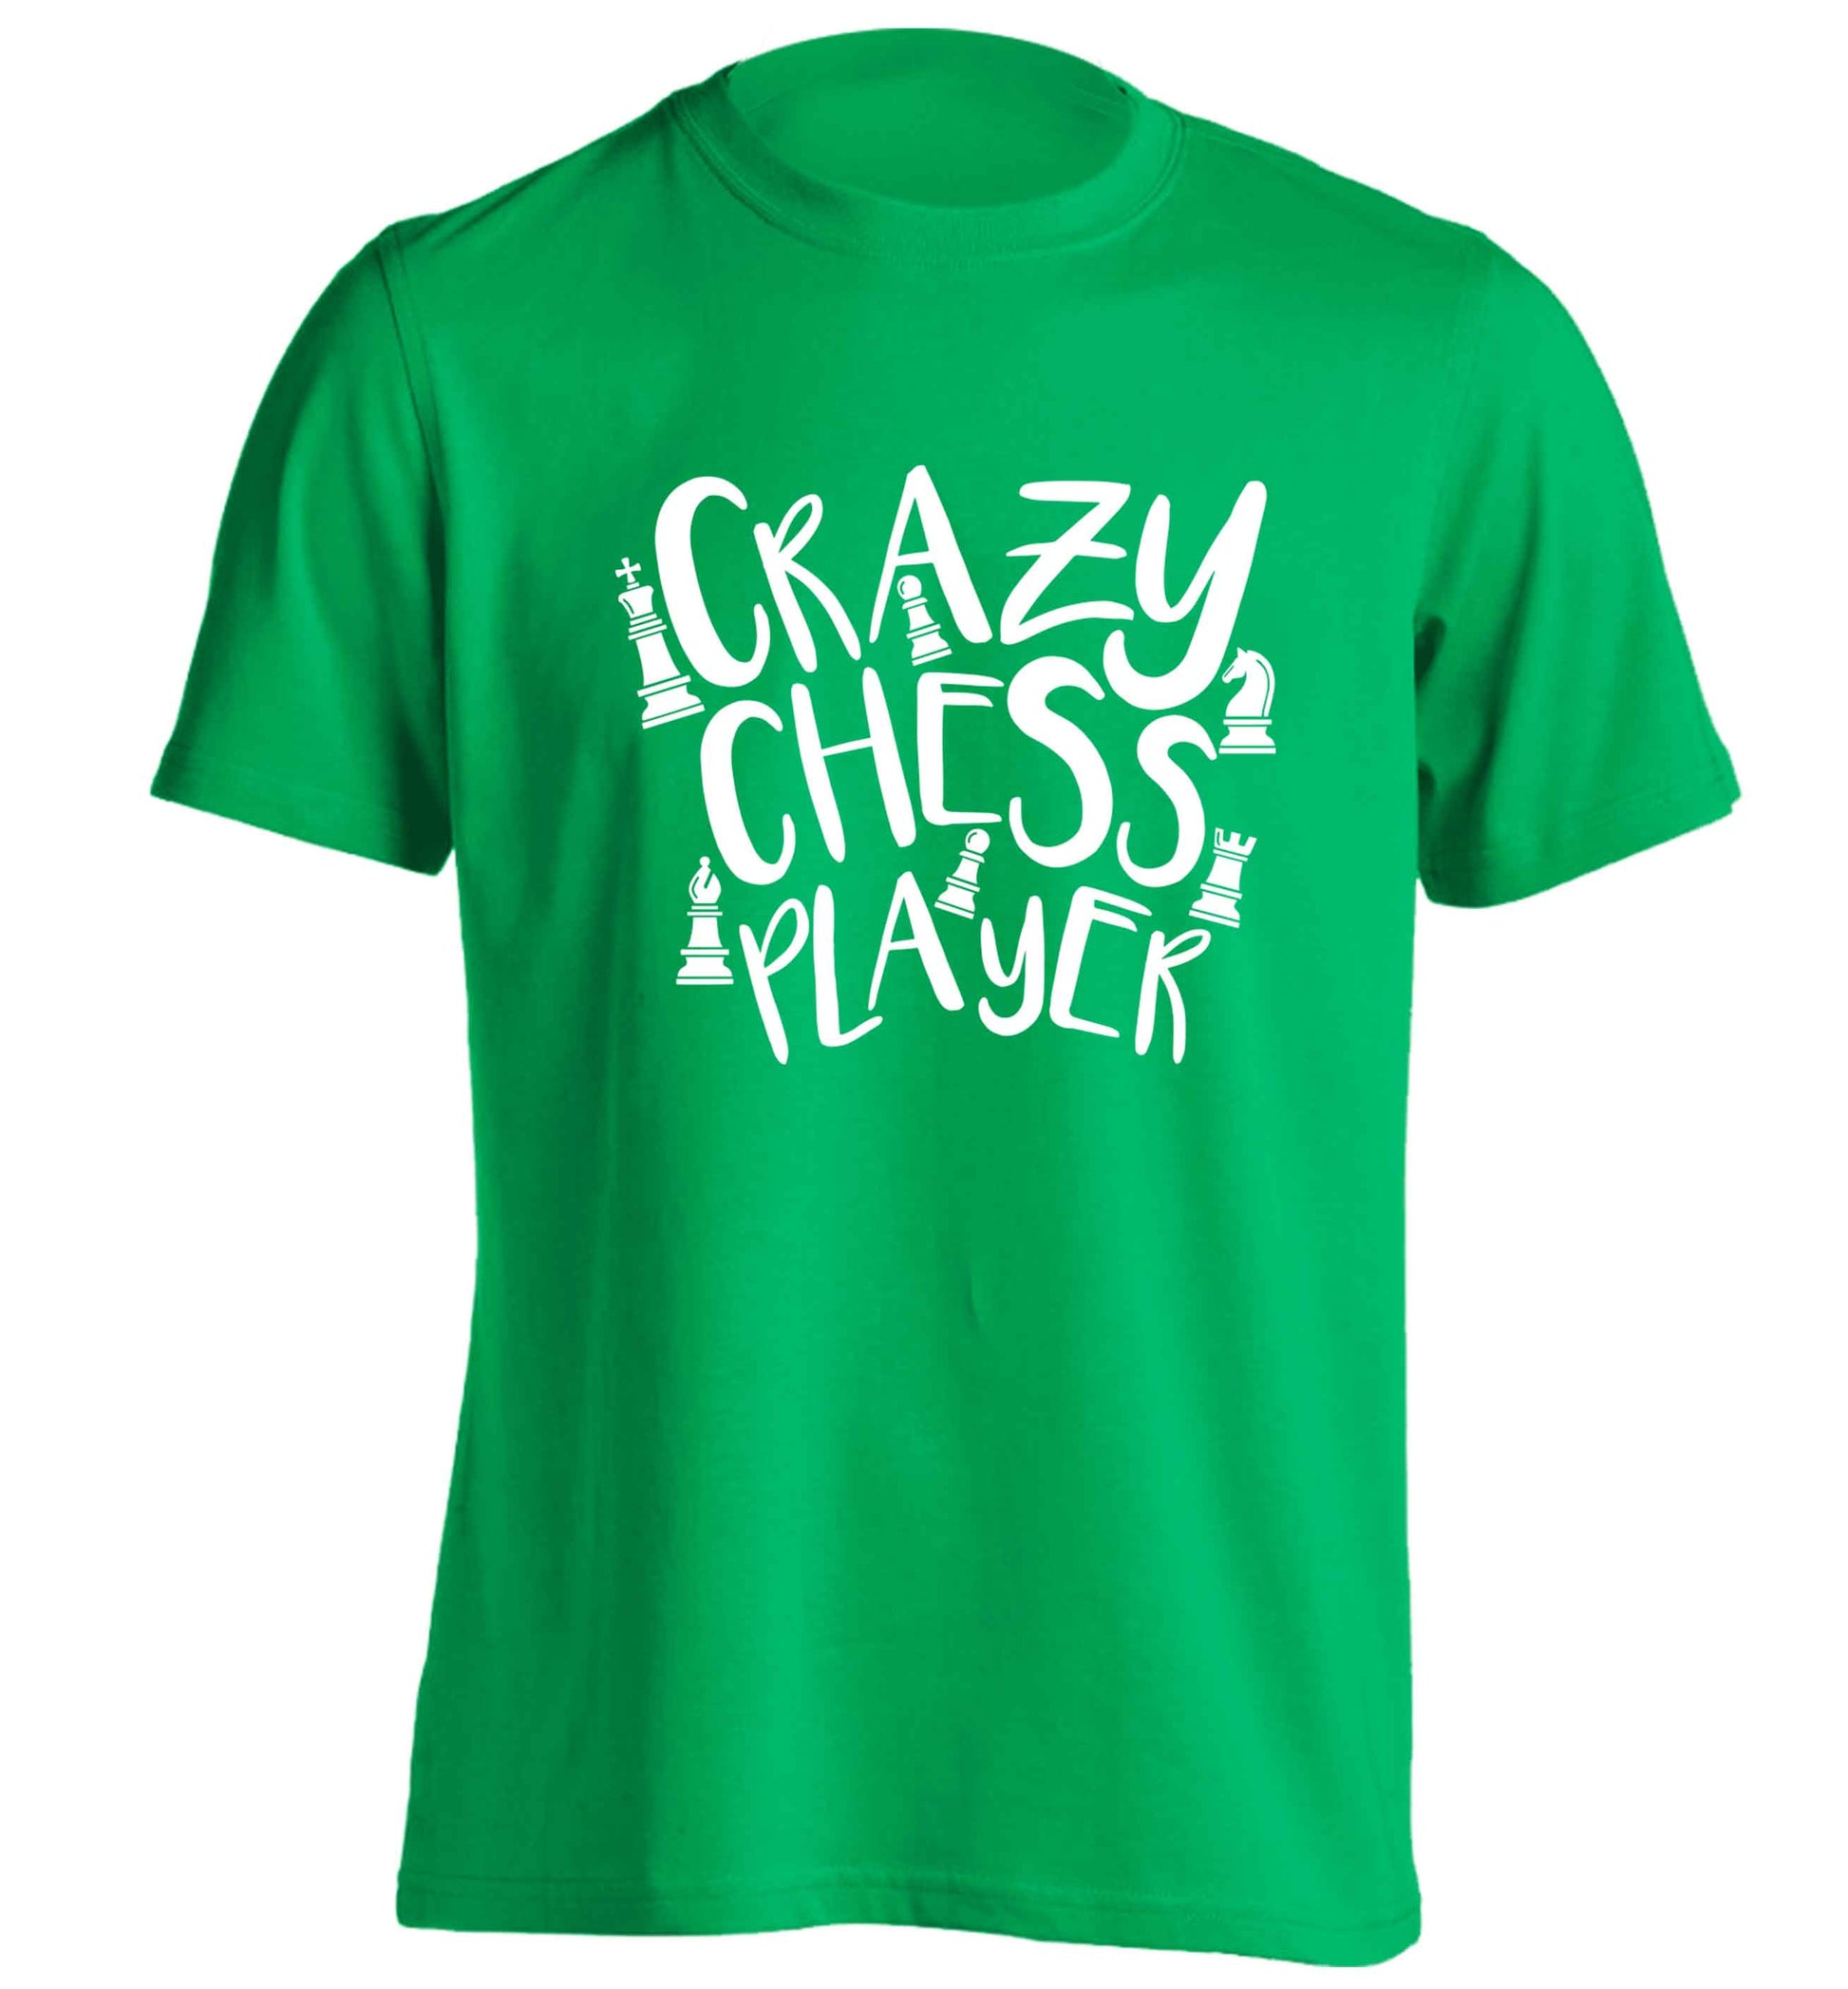 Crazy chess player adults unisex green Tshirt 2XL